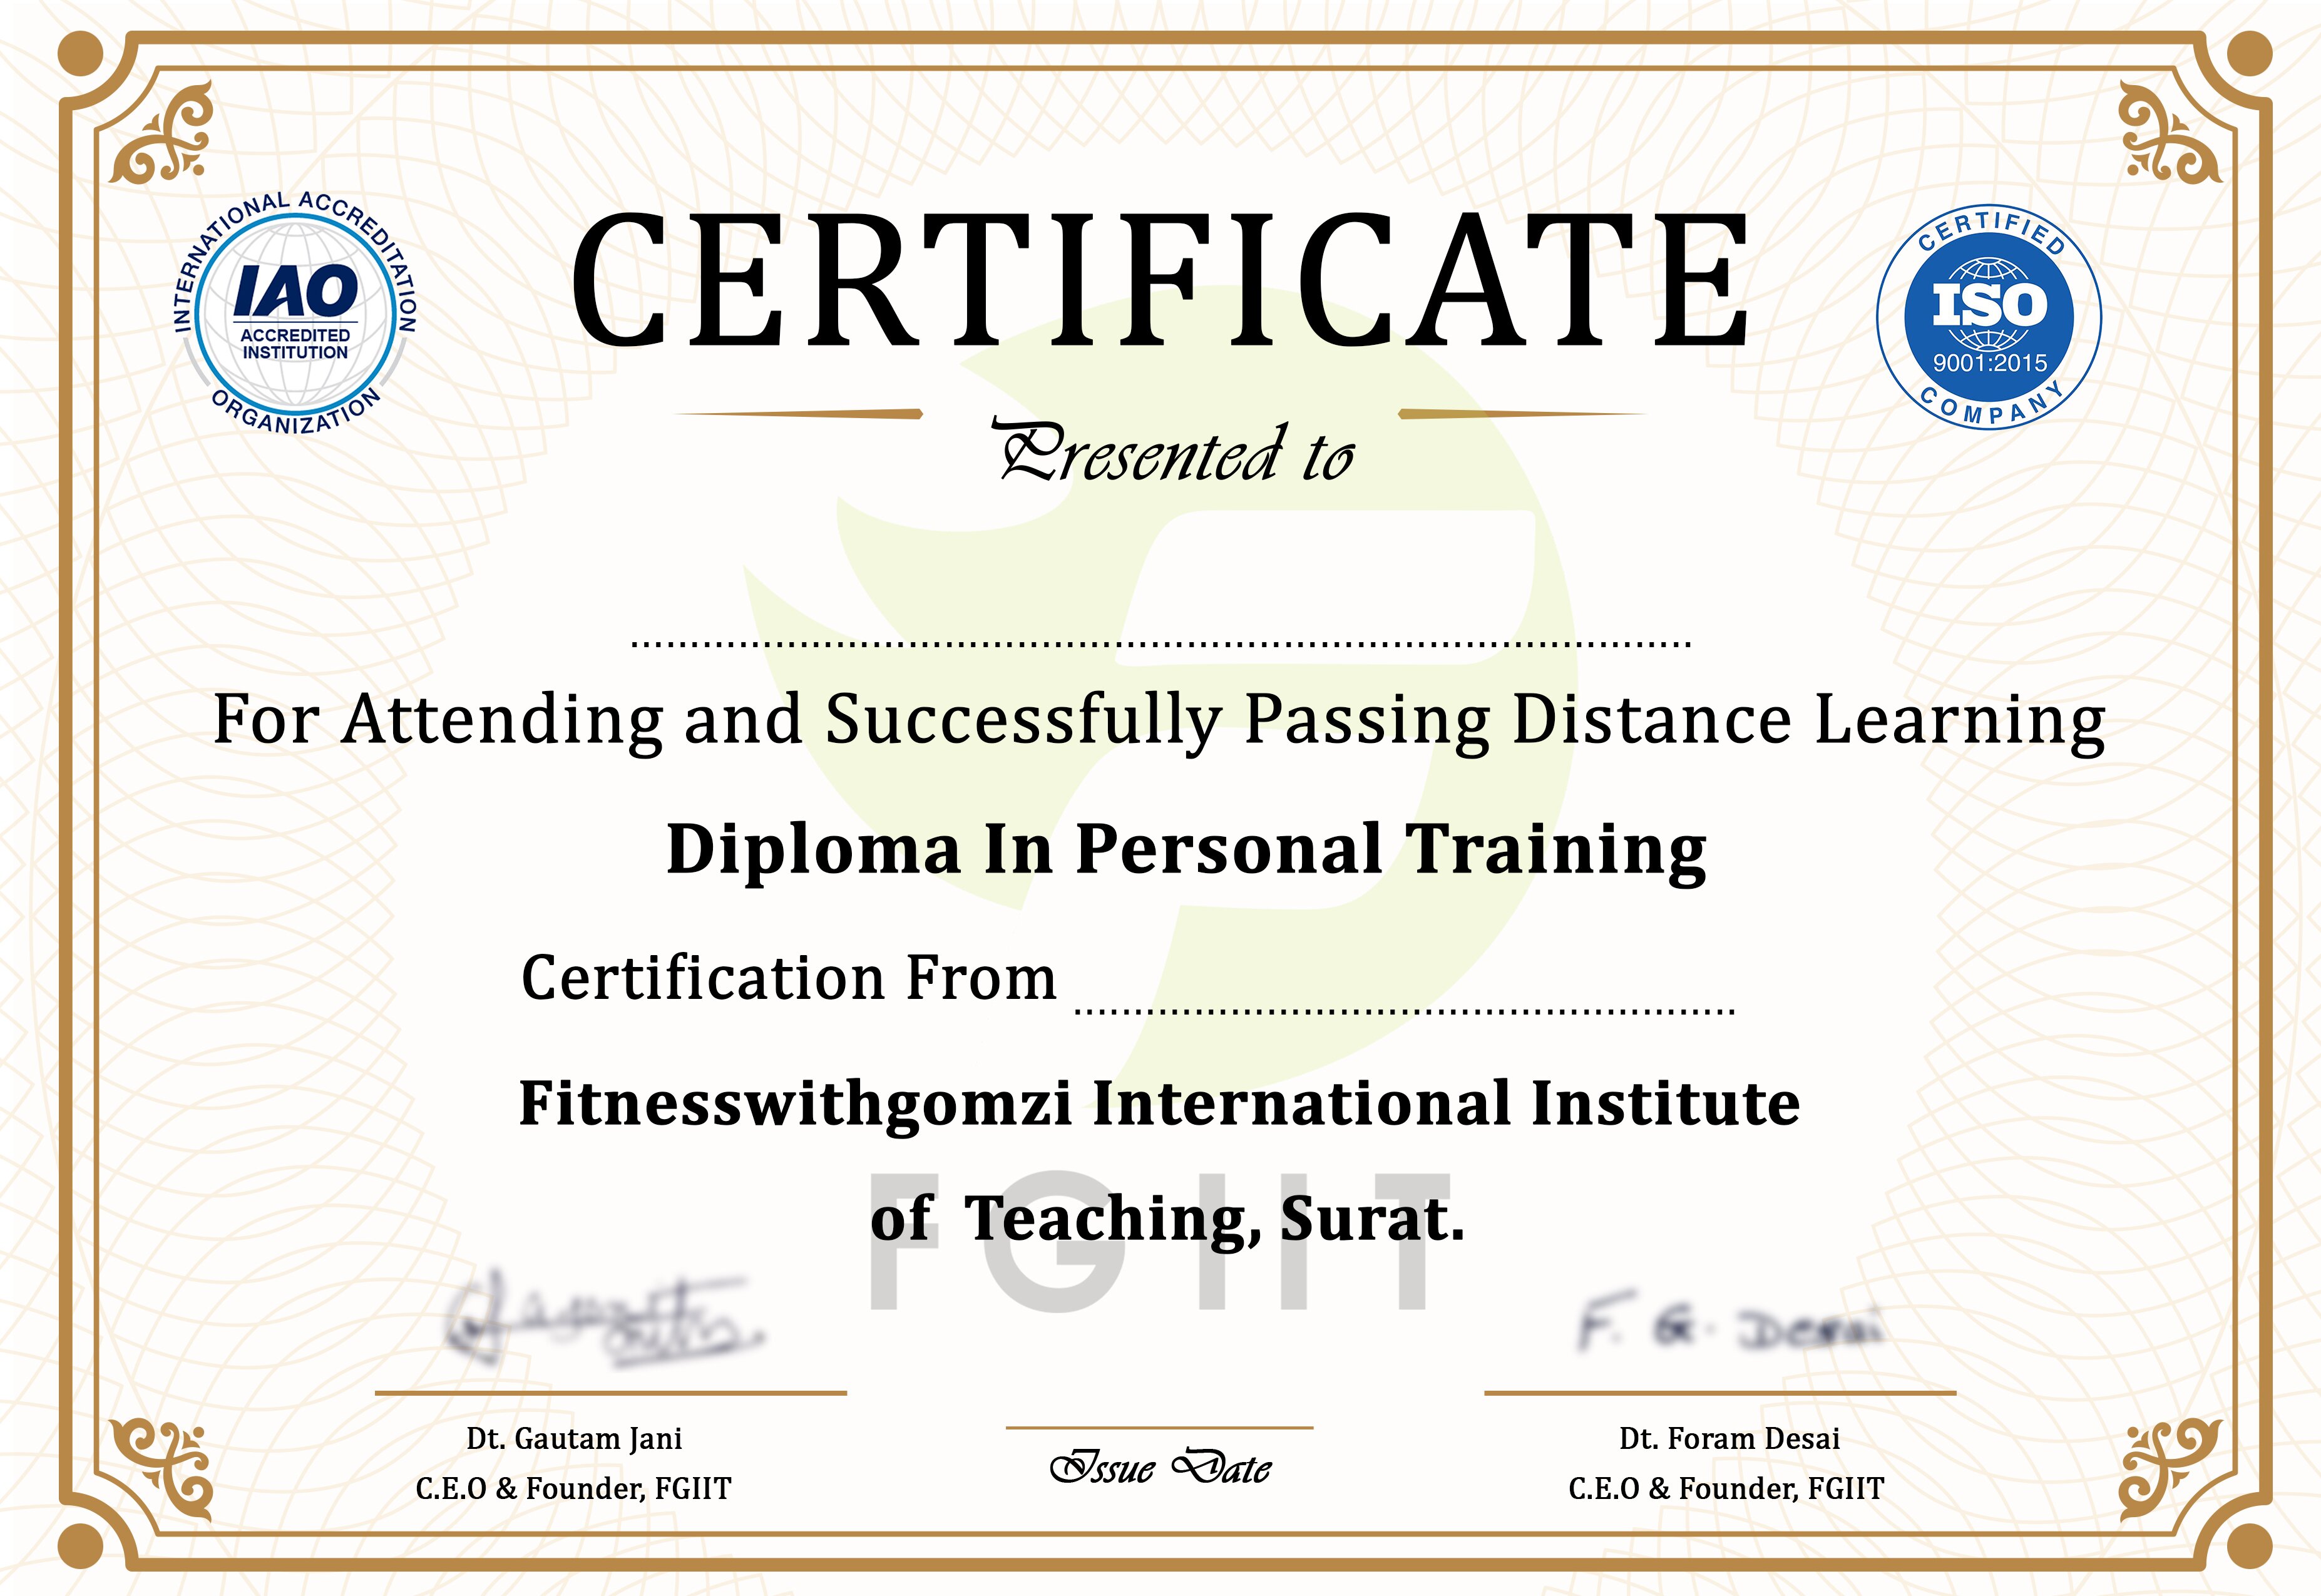 International Accreditation Certificate (IAO)